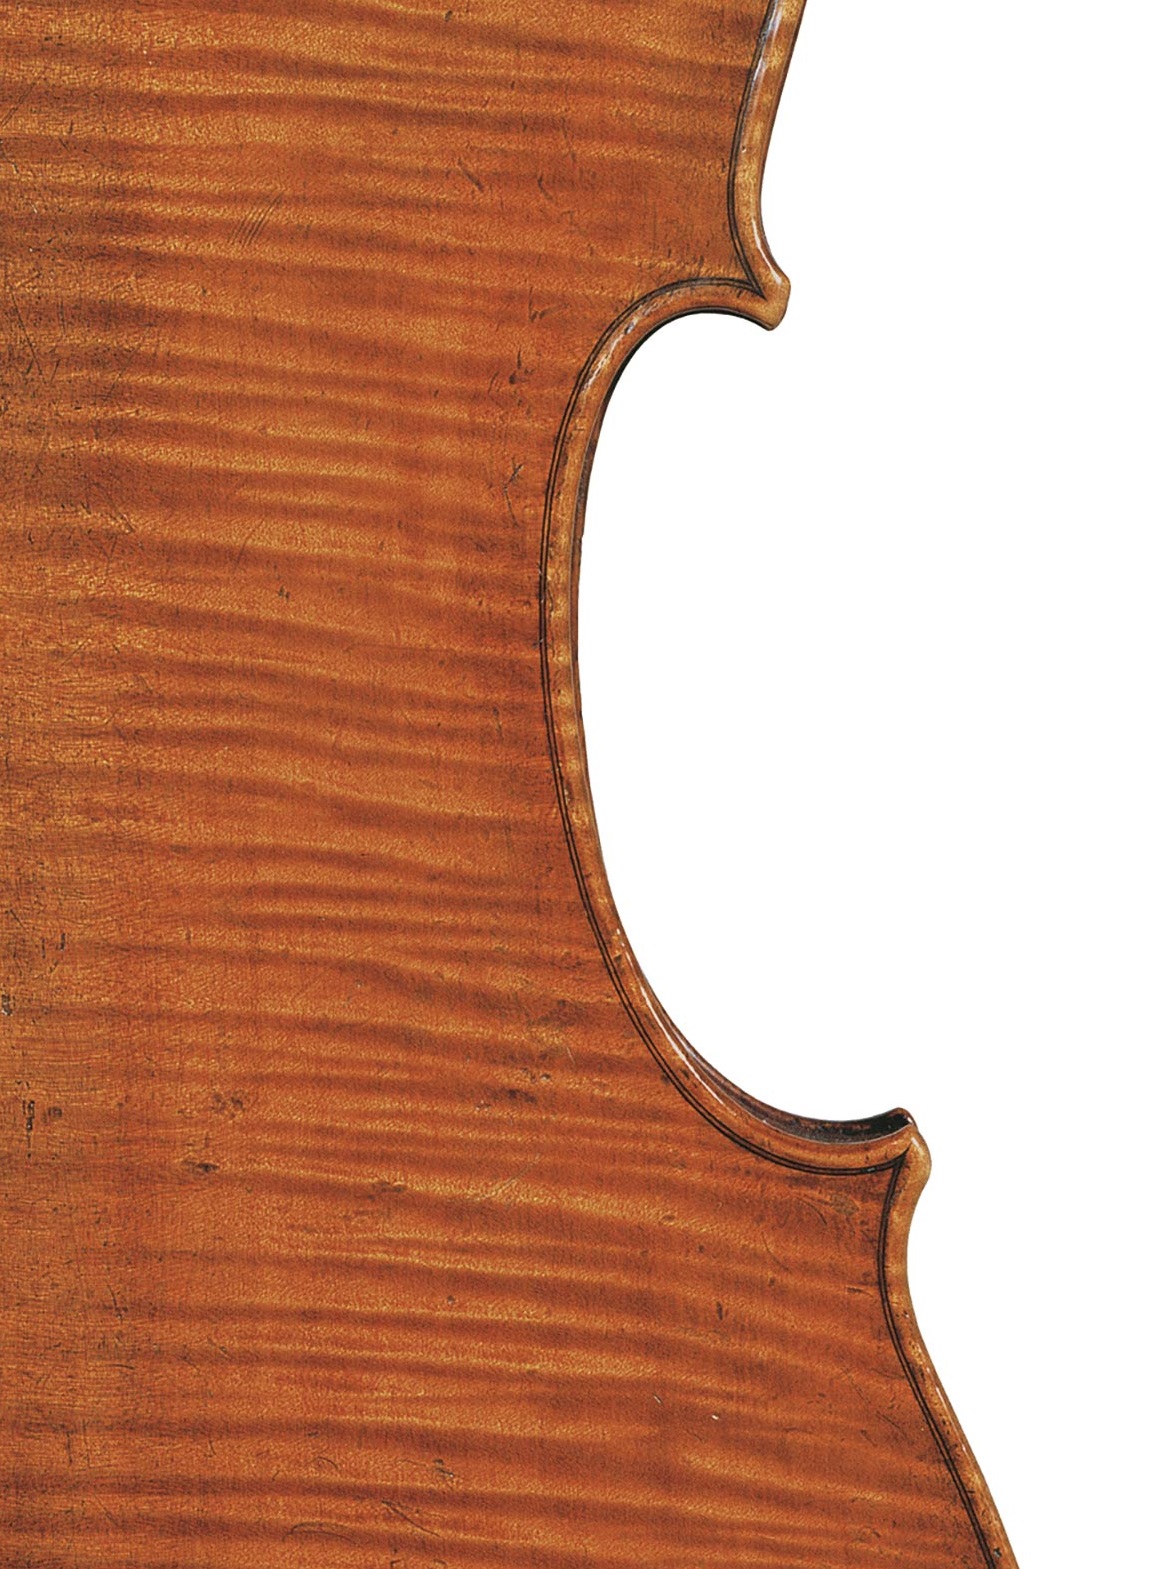 Back of the Gore Booth cello by Antonio Stradivari, Cremona, 1710